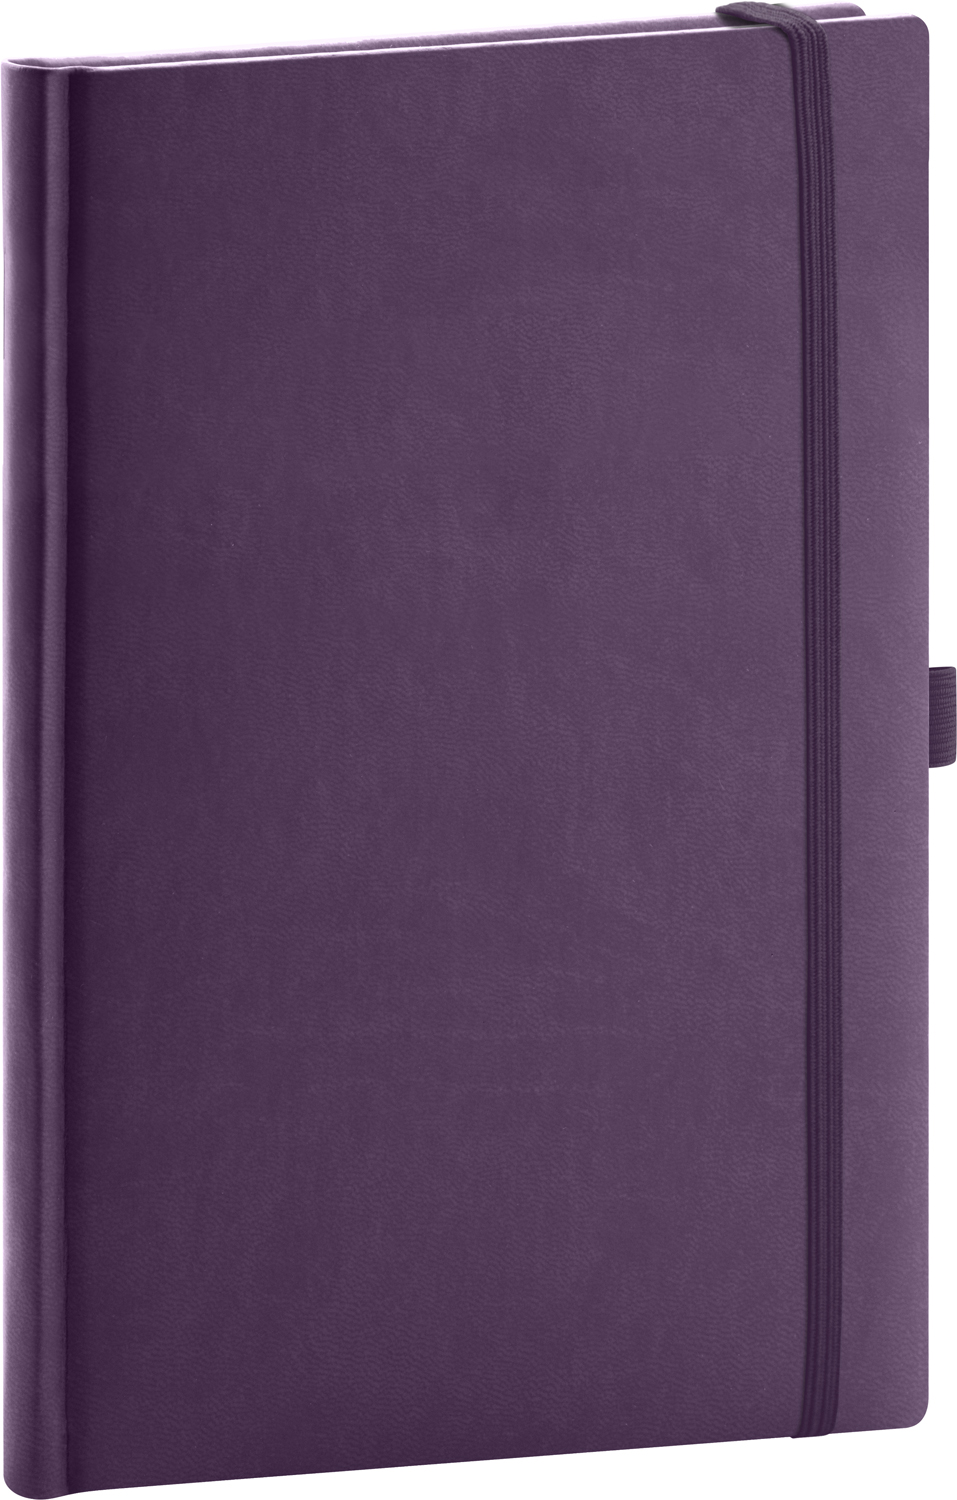 Linkovaný zápisník Aprint Neo, A5 - fialová